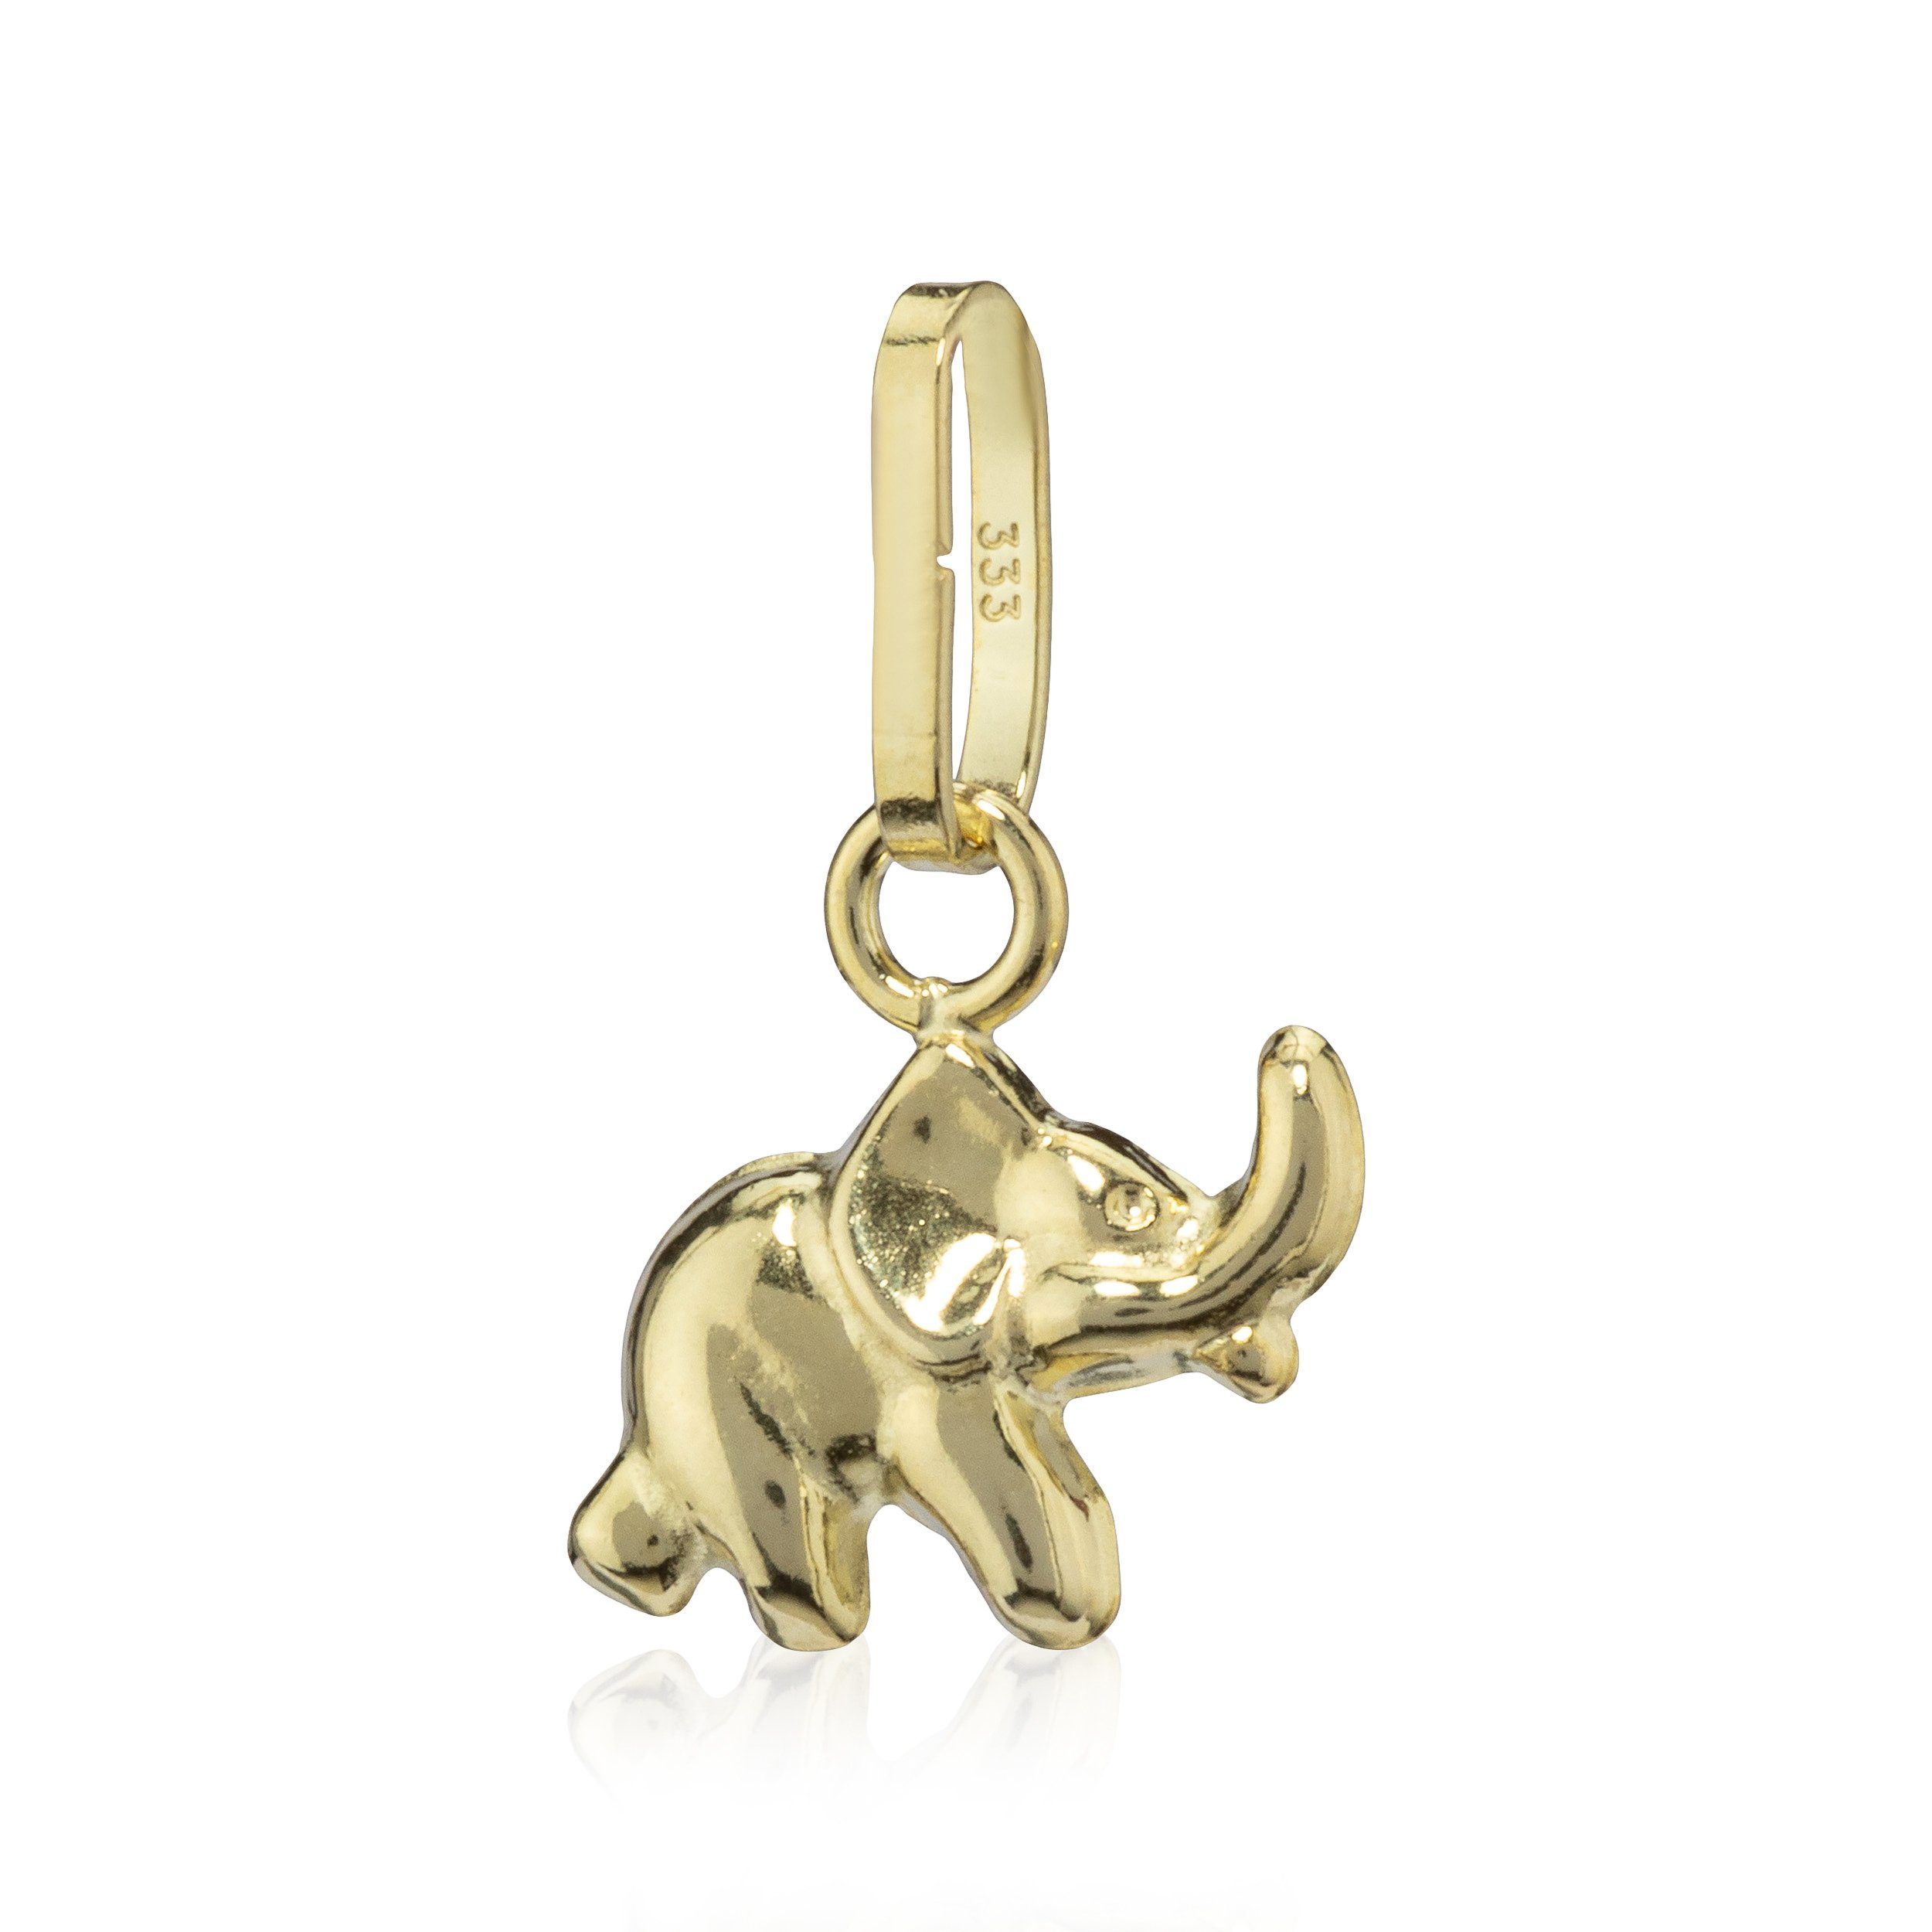 NKlaus Kettenanhänger Baby Elefant klein 333 Gelb Gold 8 Karat Kettenanh